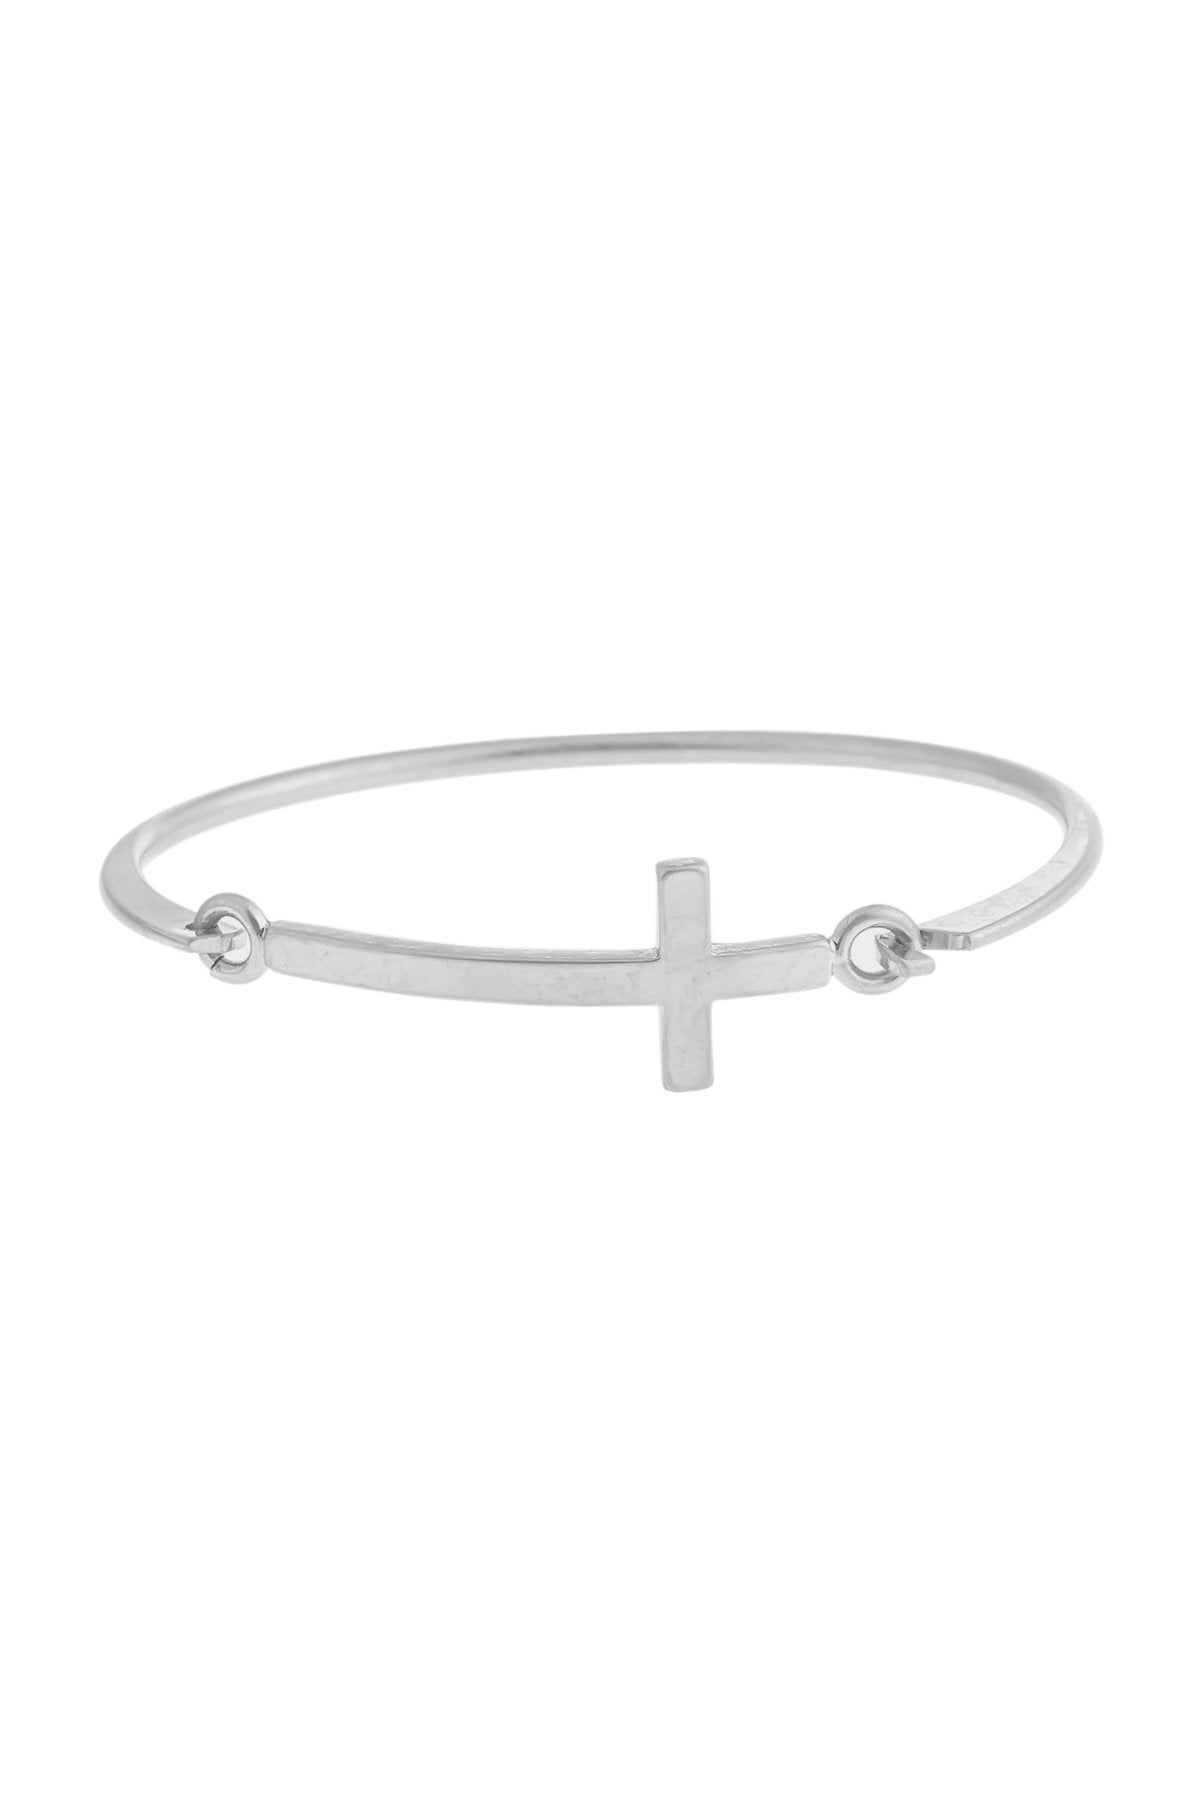 Hdb3122 - Cross Charm Cuff Bracelet